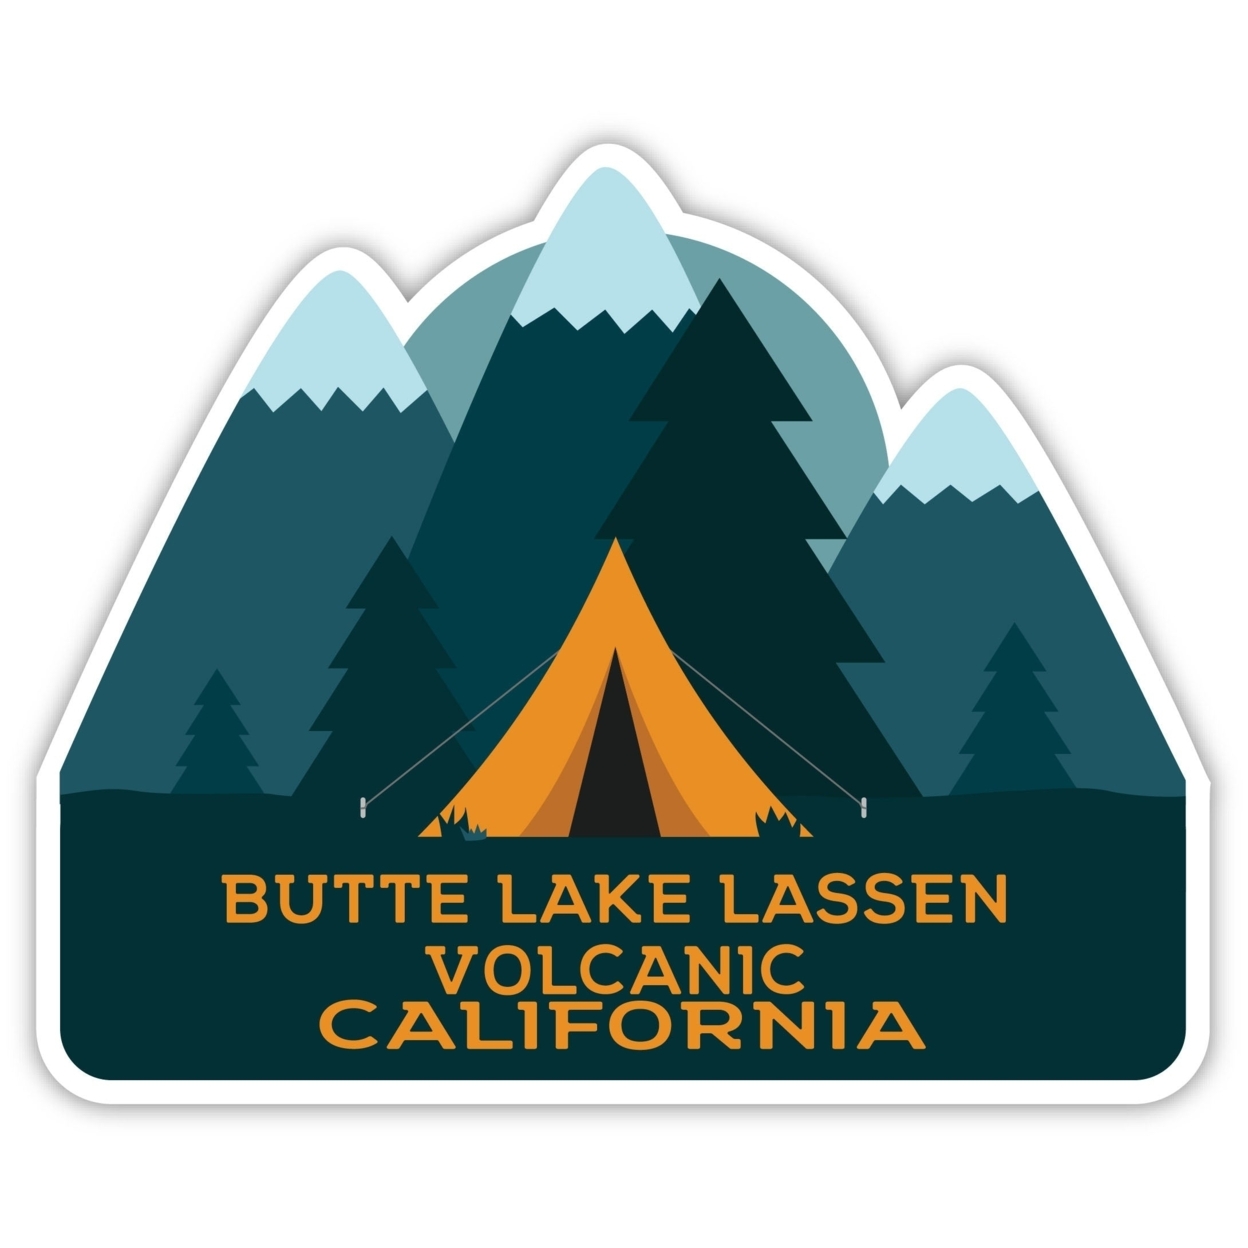 Butte Lake Lassen Volcanic California Souvenir Decorative Stickers (Choose Theme And Size) - 4-Pack, 6-Inch, Tent